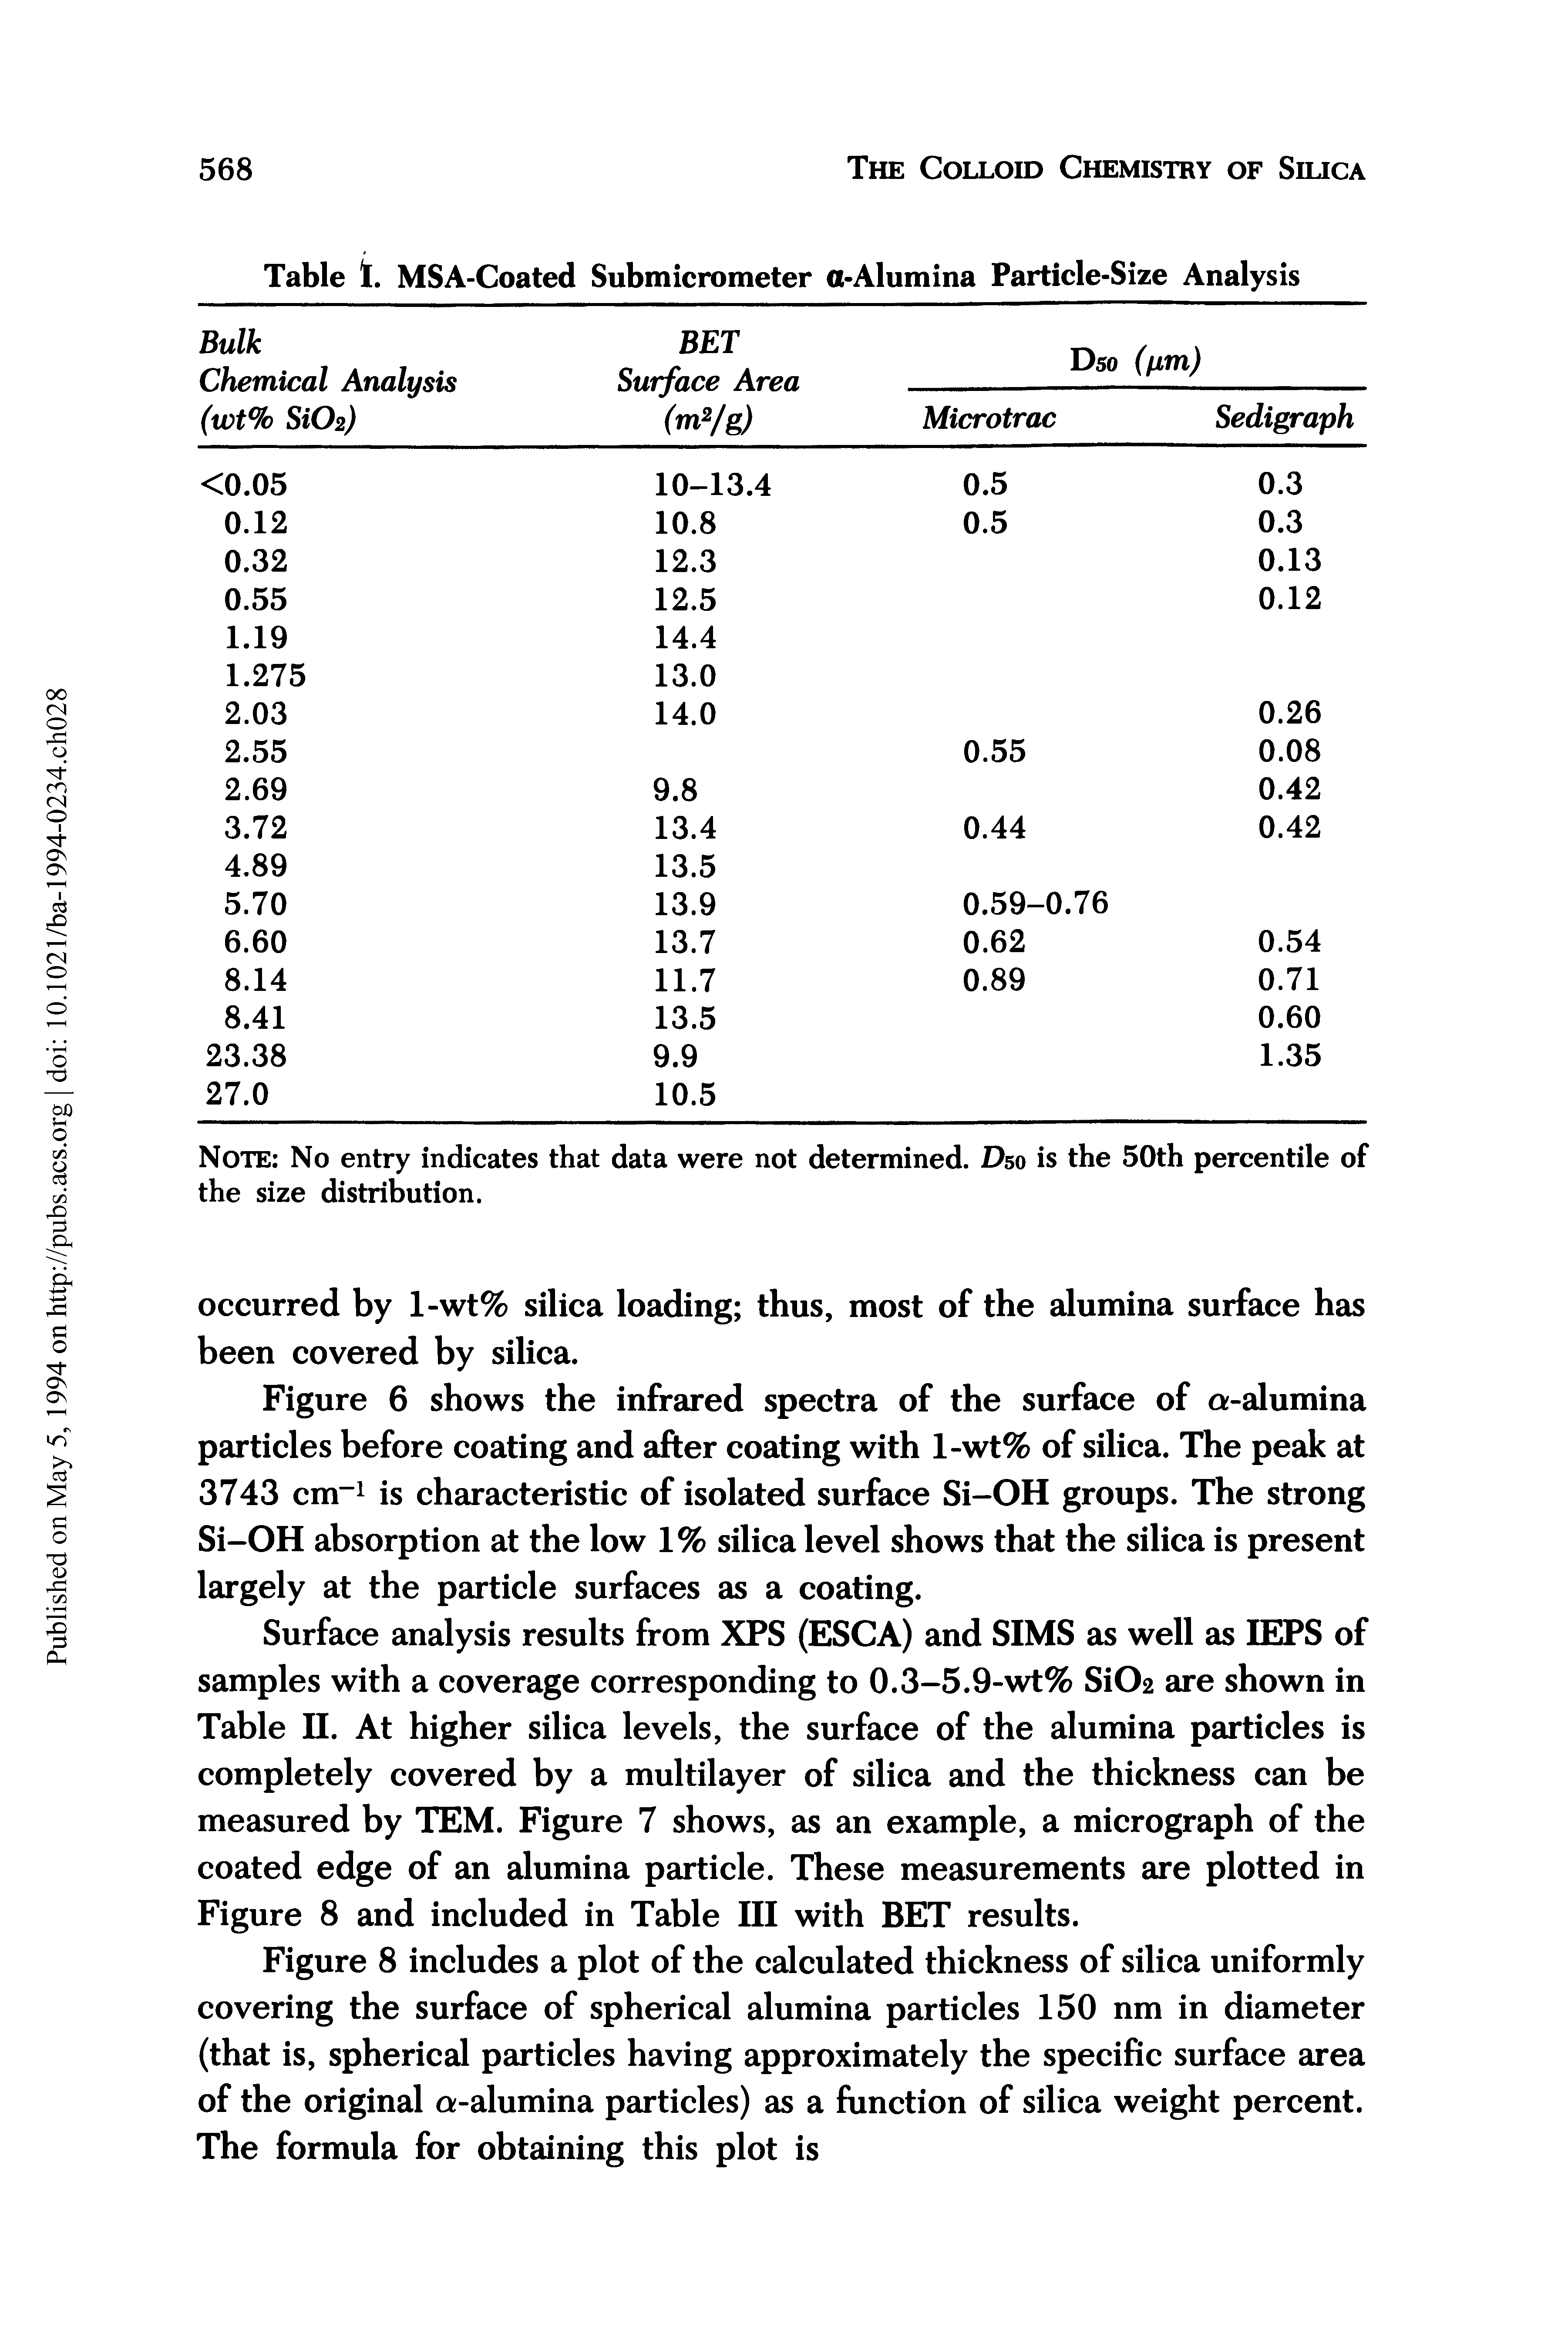 Table I. MSA-Coated Submicrometer a-Alumina Particle-Size Analysis...